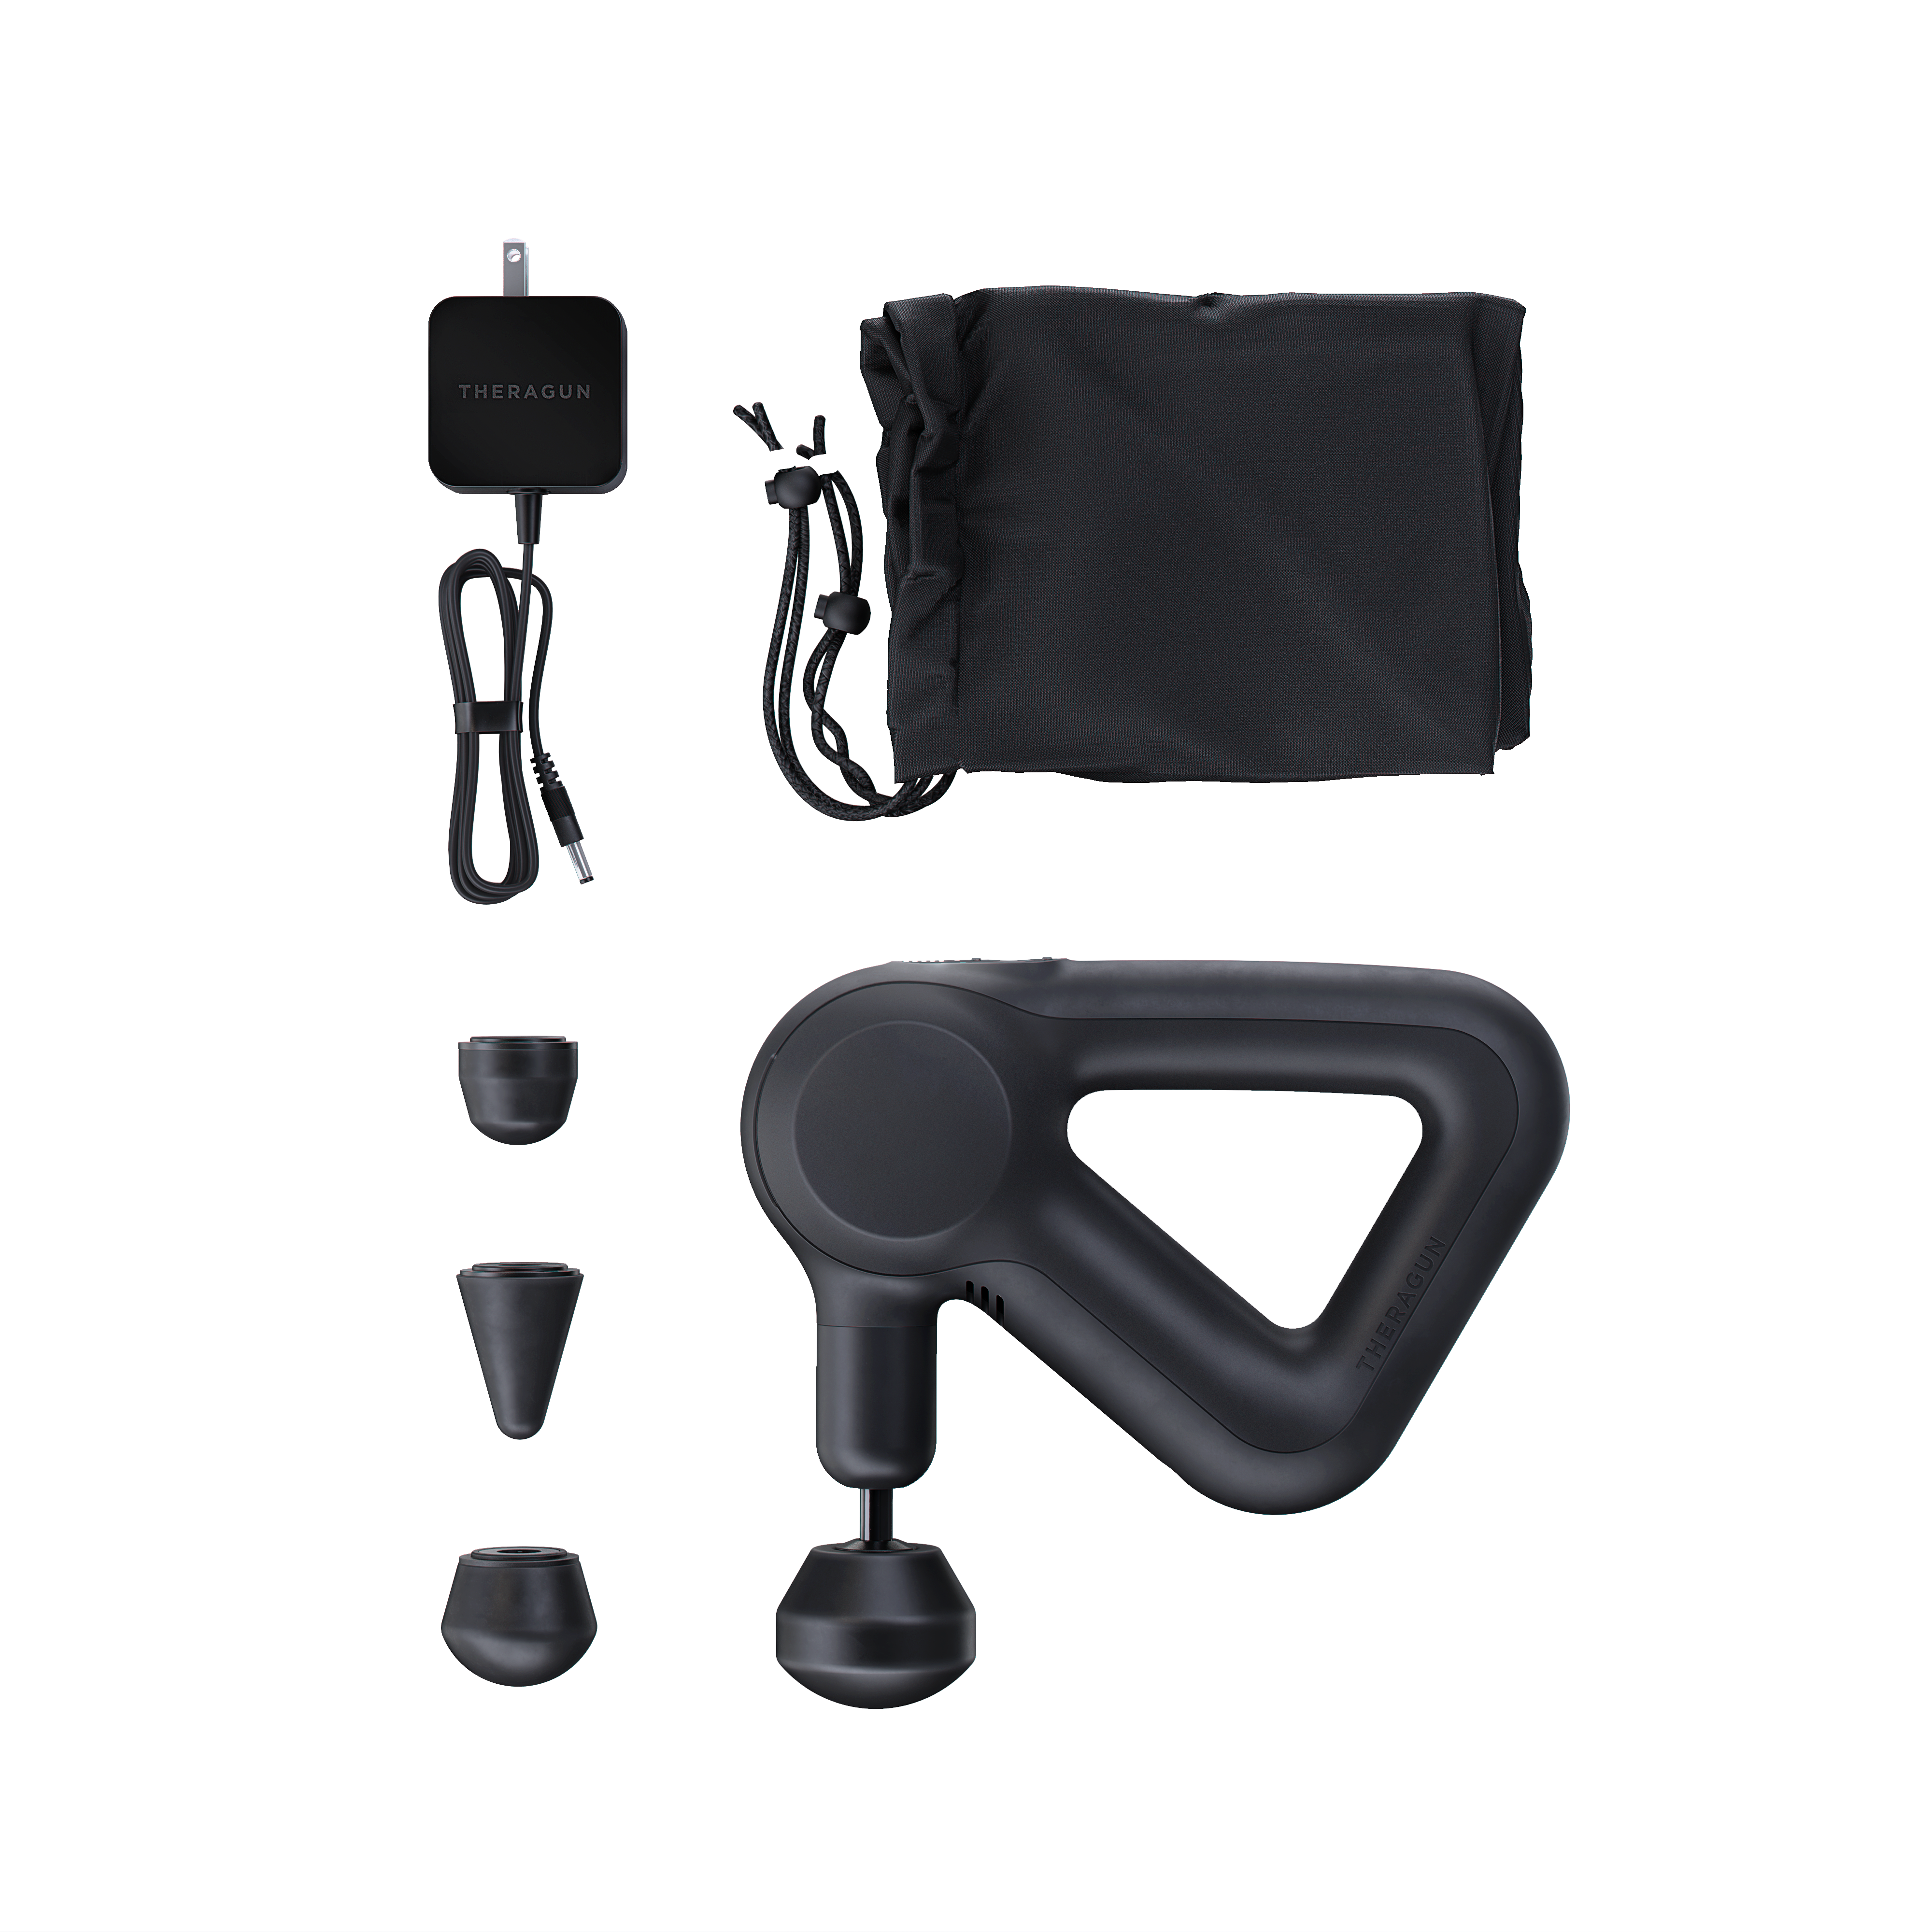 Therabody Theragun Prime App-Connected Handheld Massage Gun, Portable Deep Tissue Massager, Black - image 4 of 4